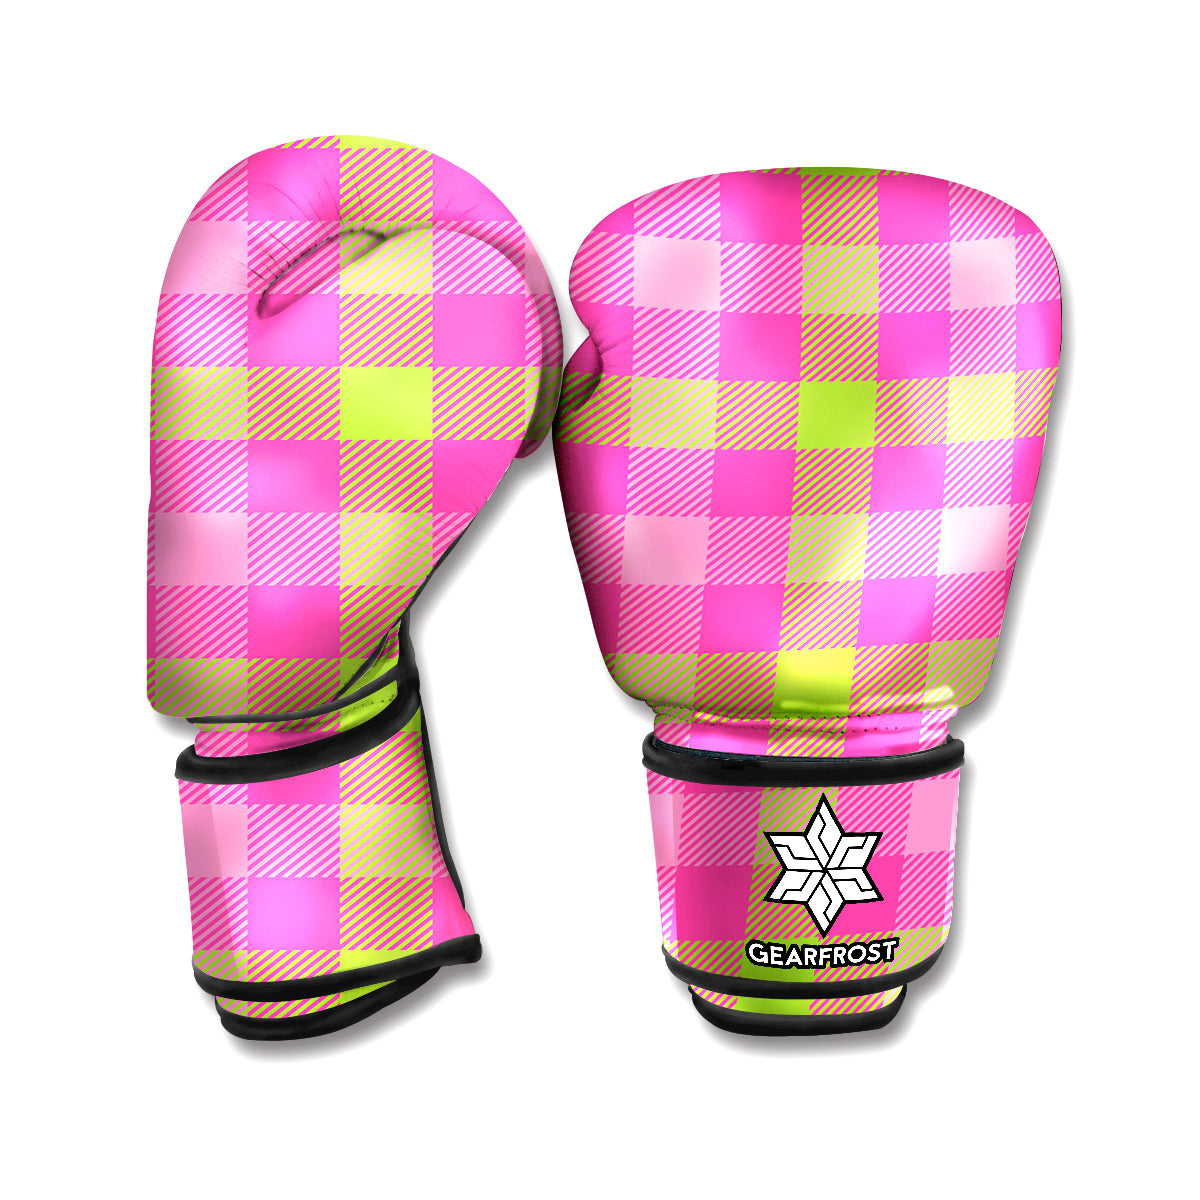 Green And Pink Buffalo Plaid Print Boxing Gloves